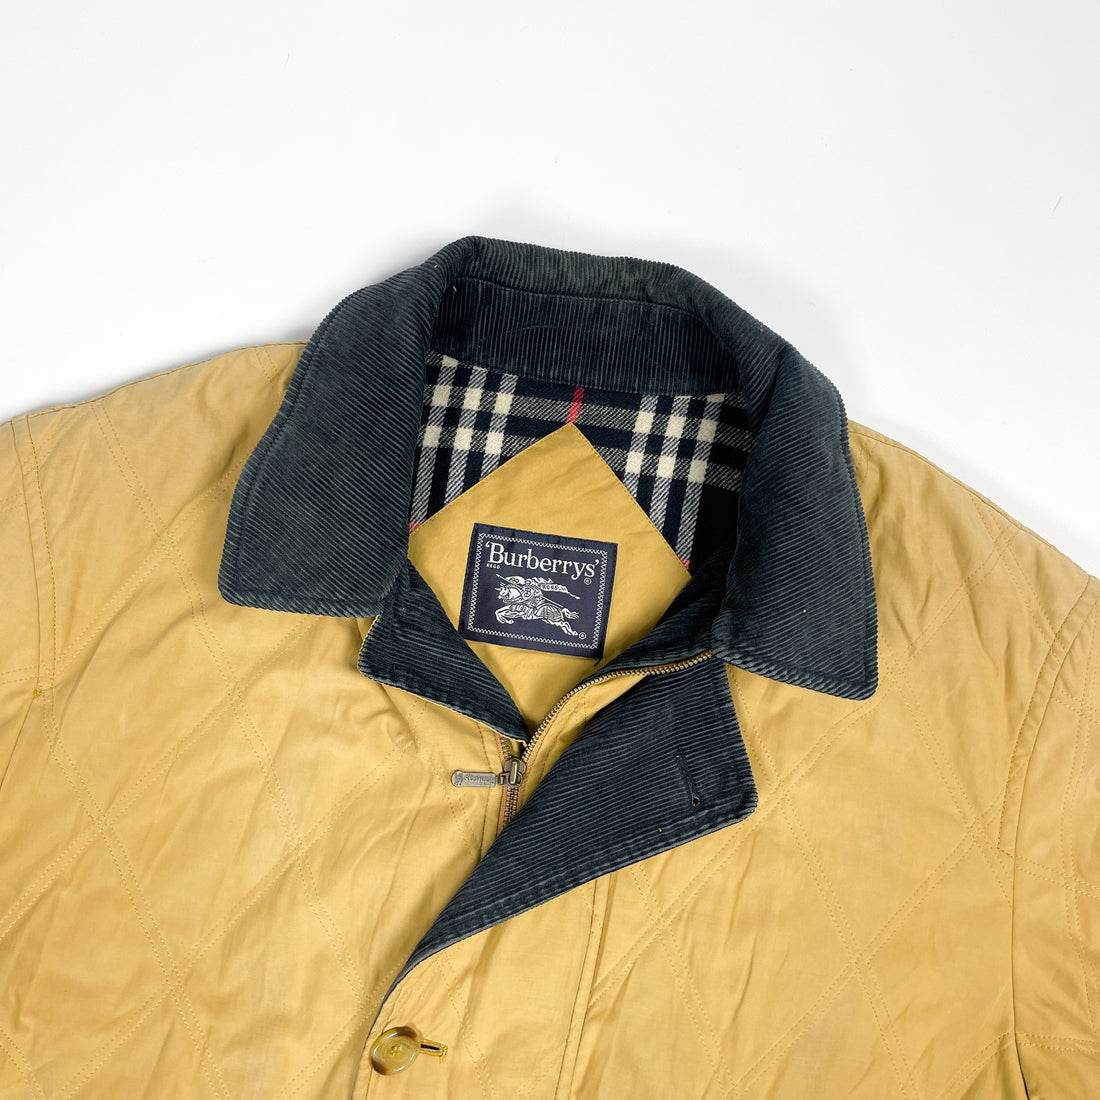 Burberrys Yellow Sailing Jacket 1990's